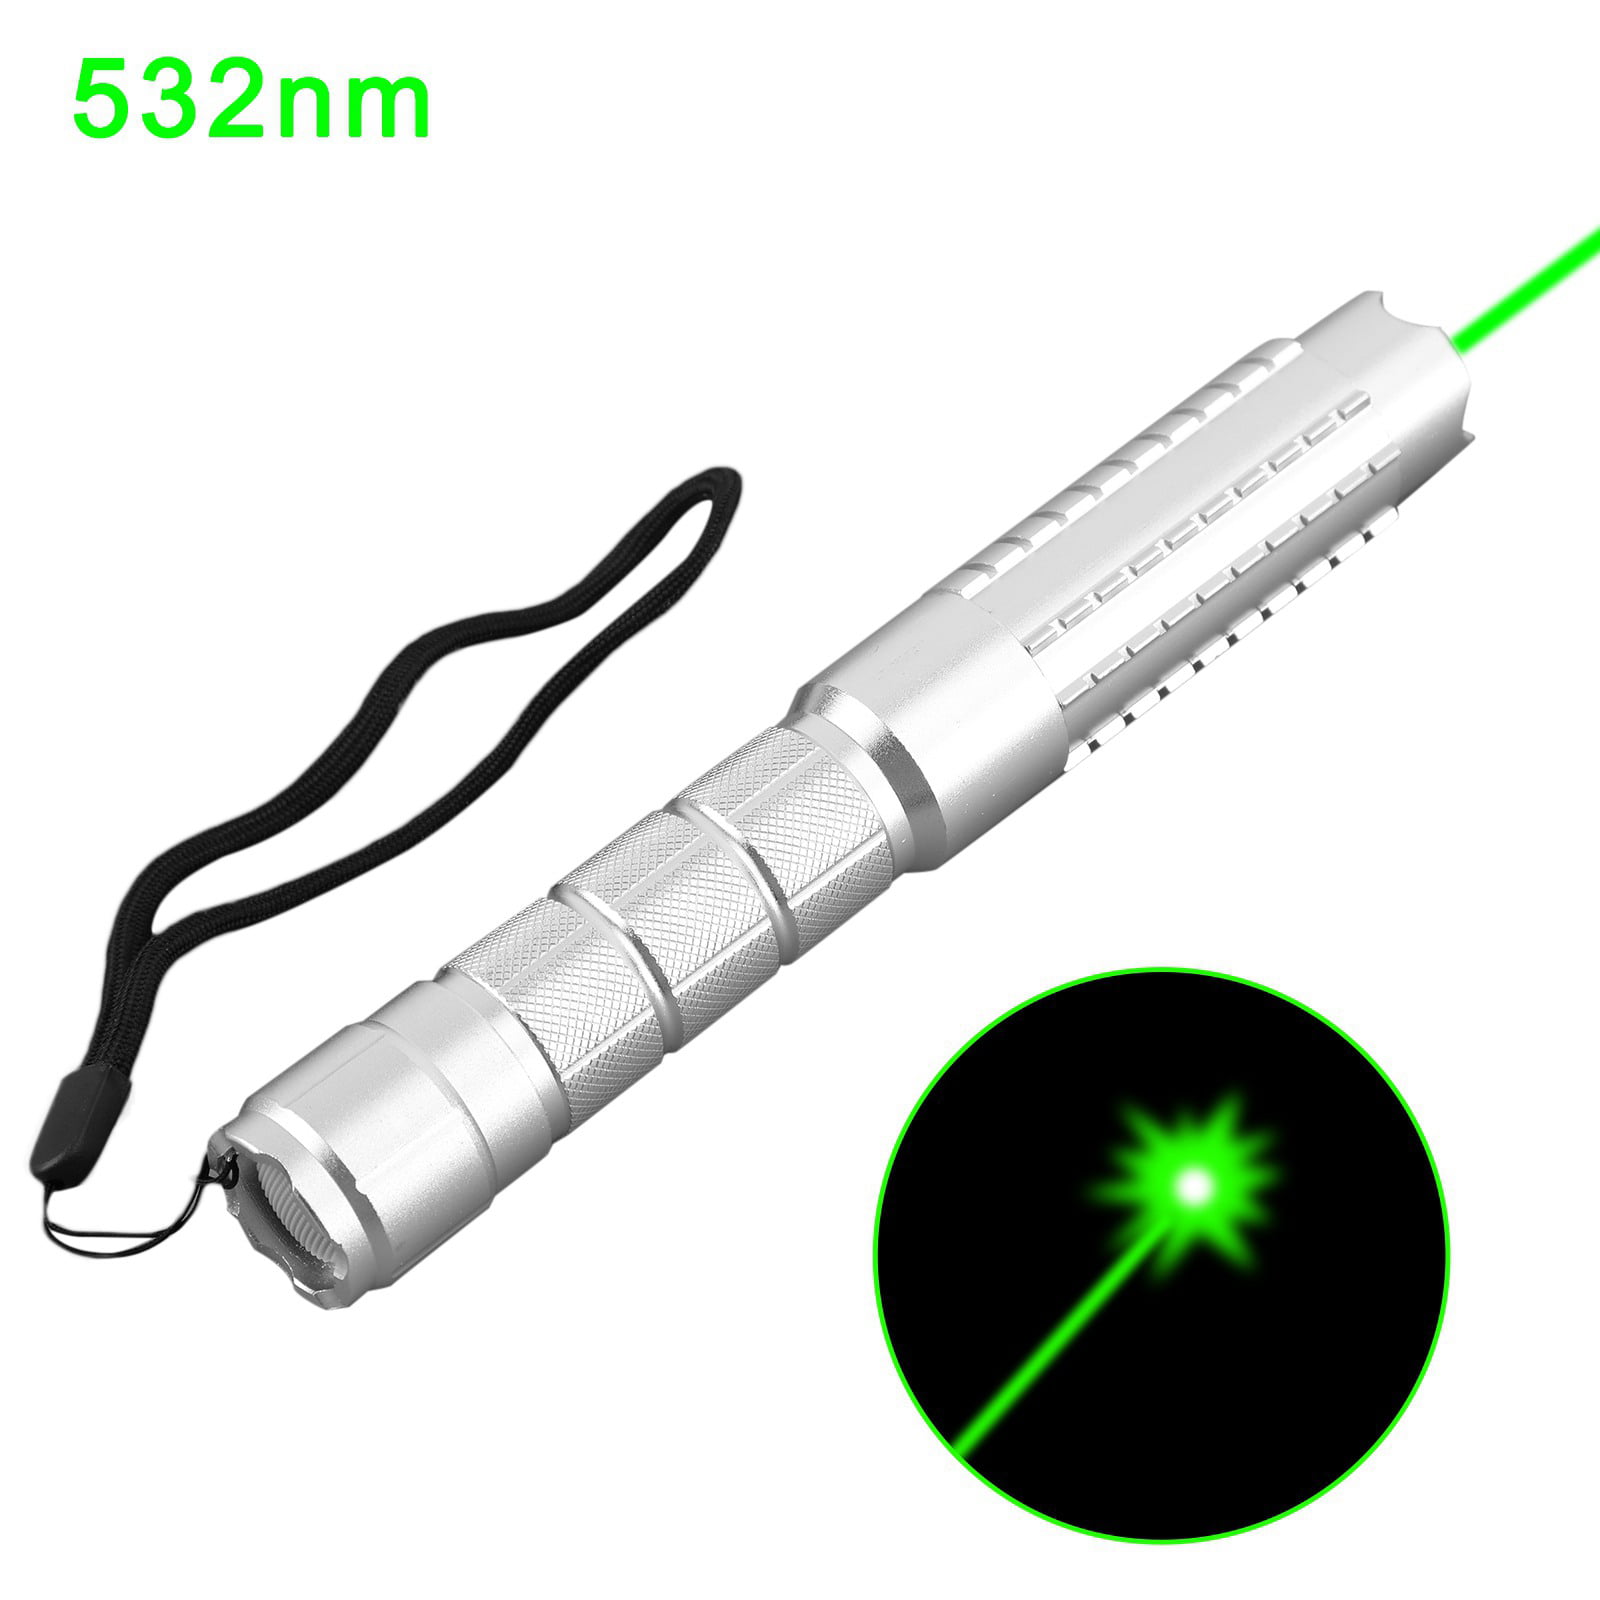 High Power Military Laserpointer Pen Green <1MW 532nm Militar Burning Beam 